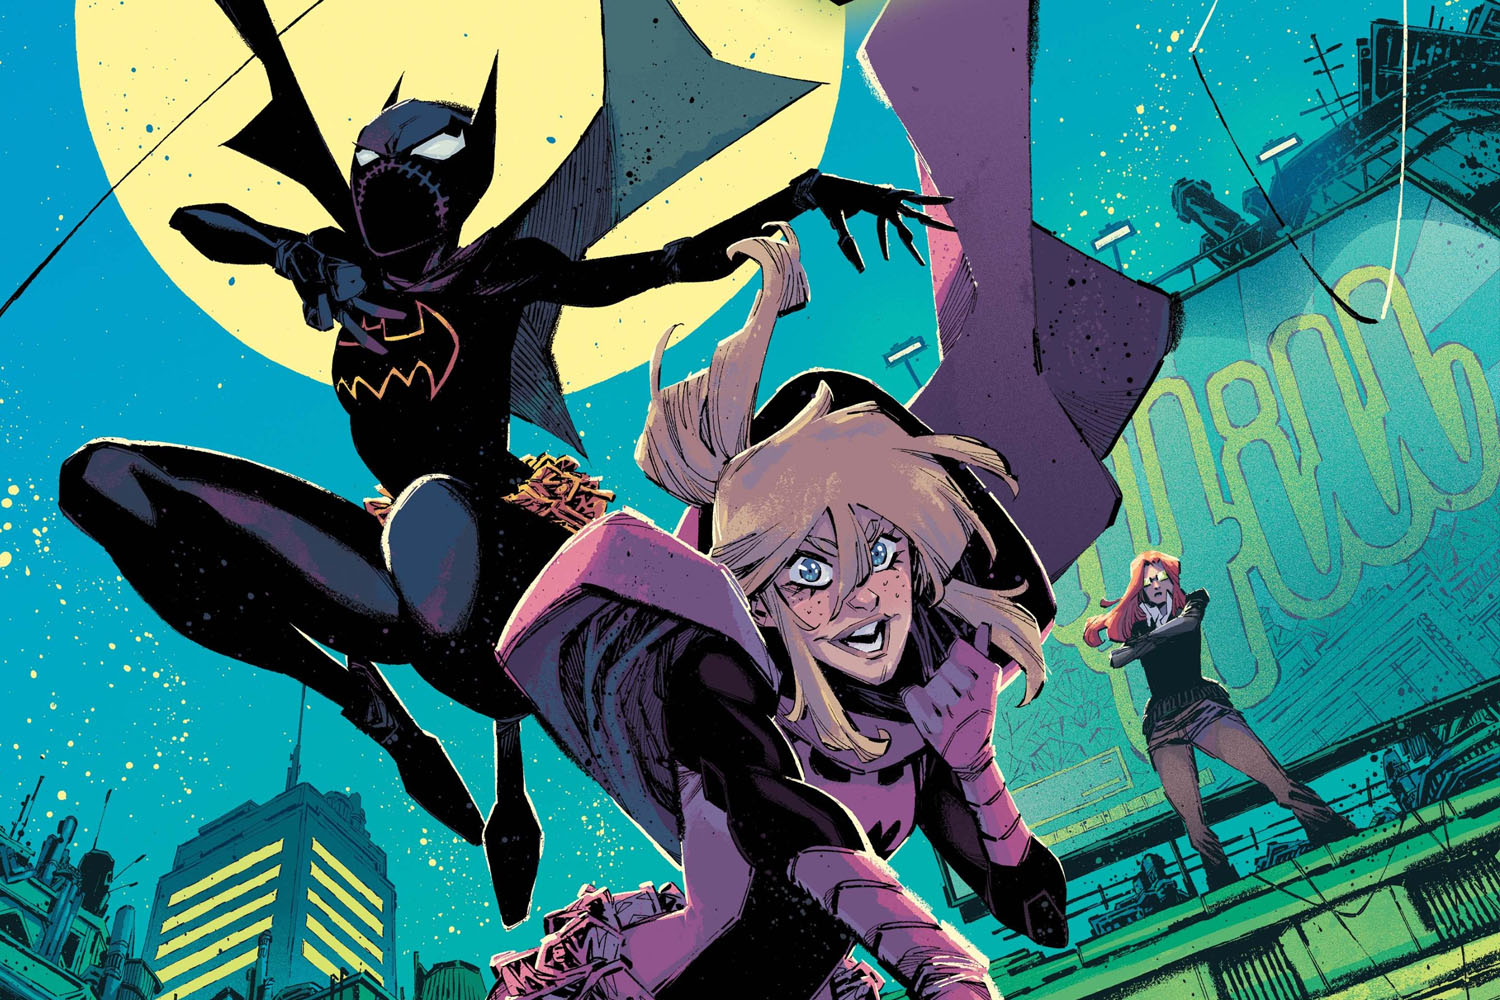 'Batgirls' #1 shows great potential